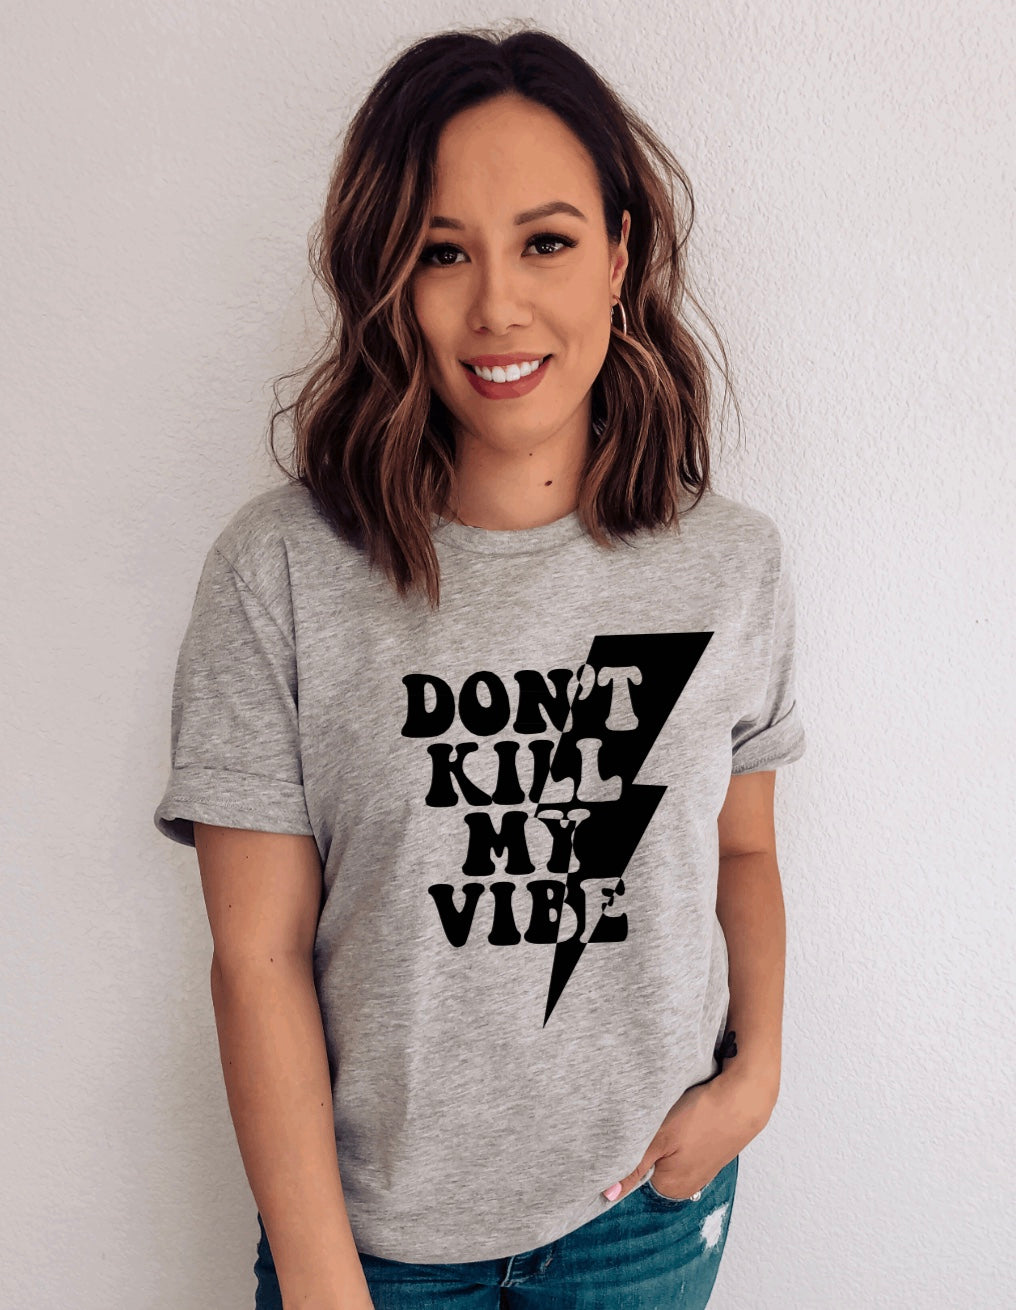 Don’t kill my vibe t-shirt